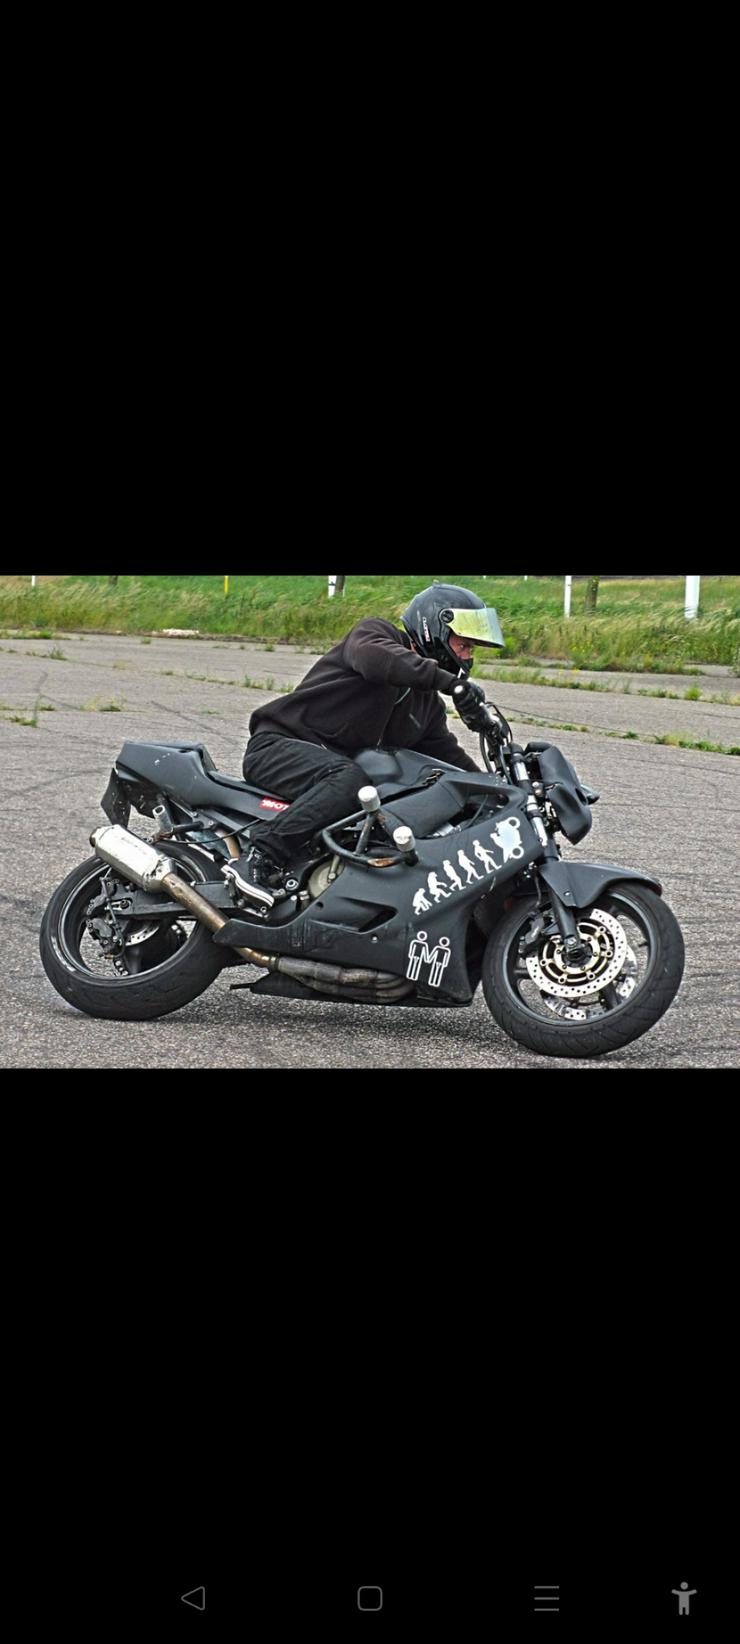 Stunt bike CBR 600 FS HONDA - Motocross - Bild 11